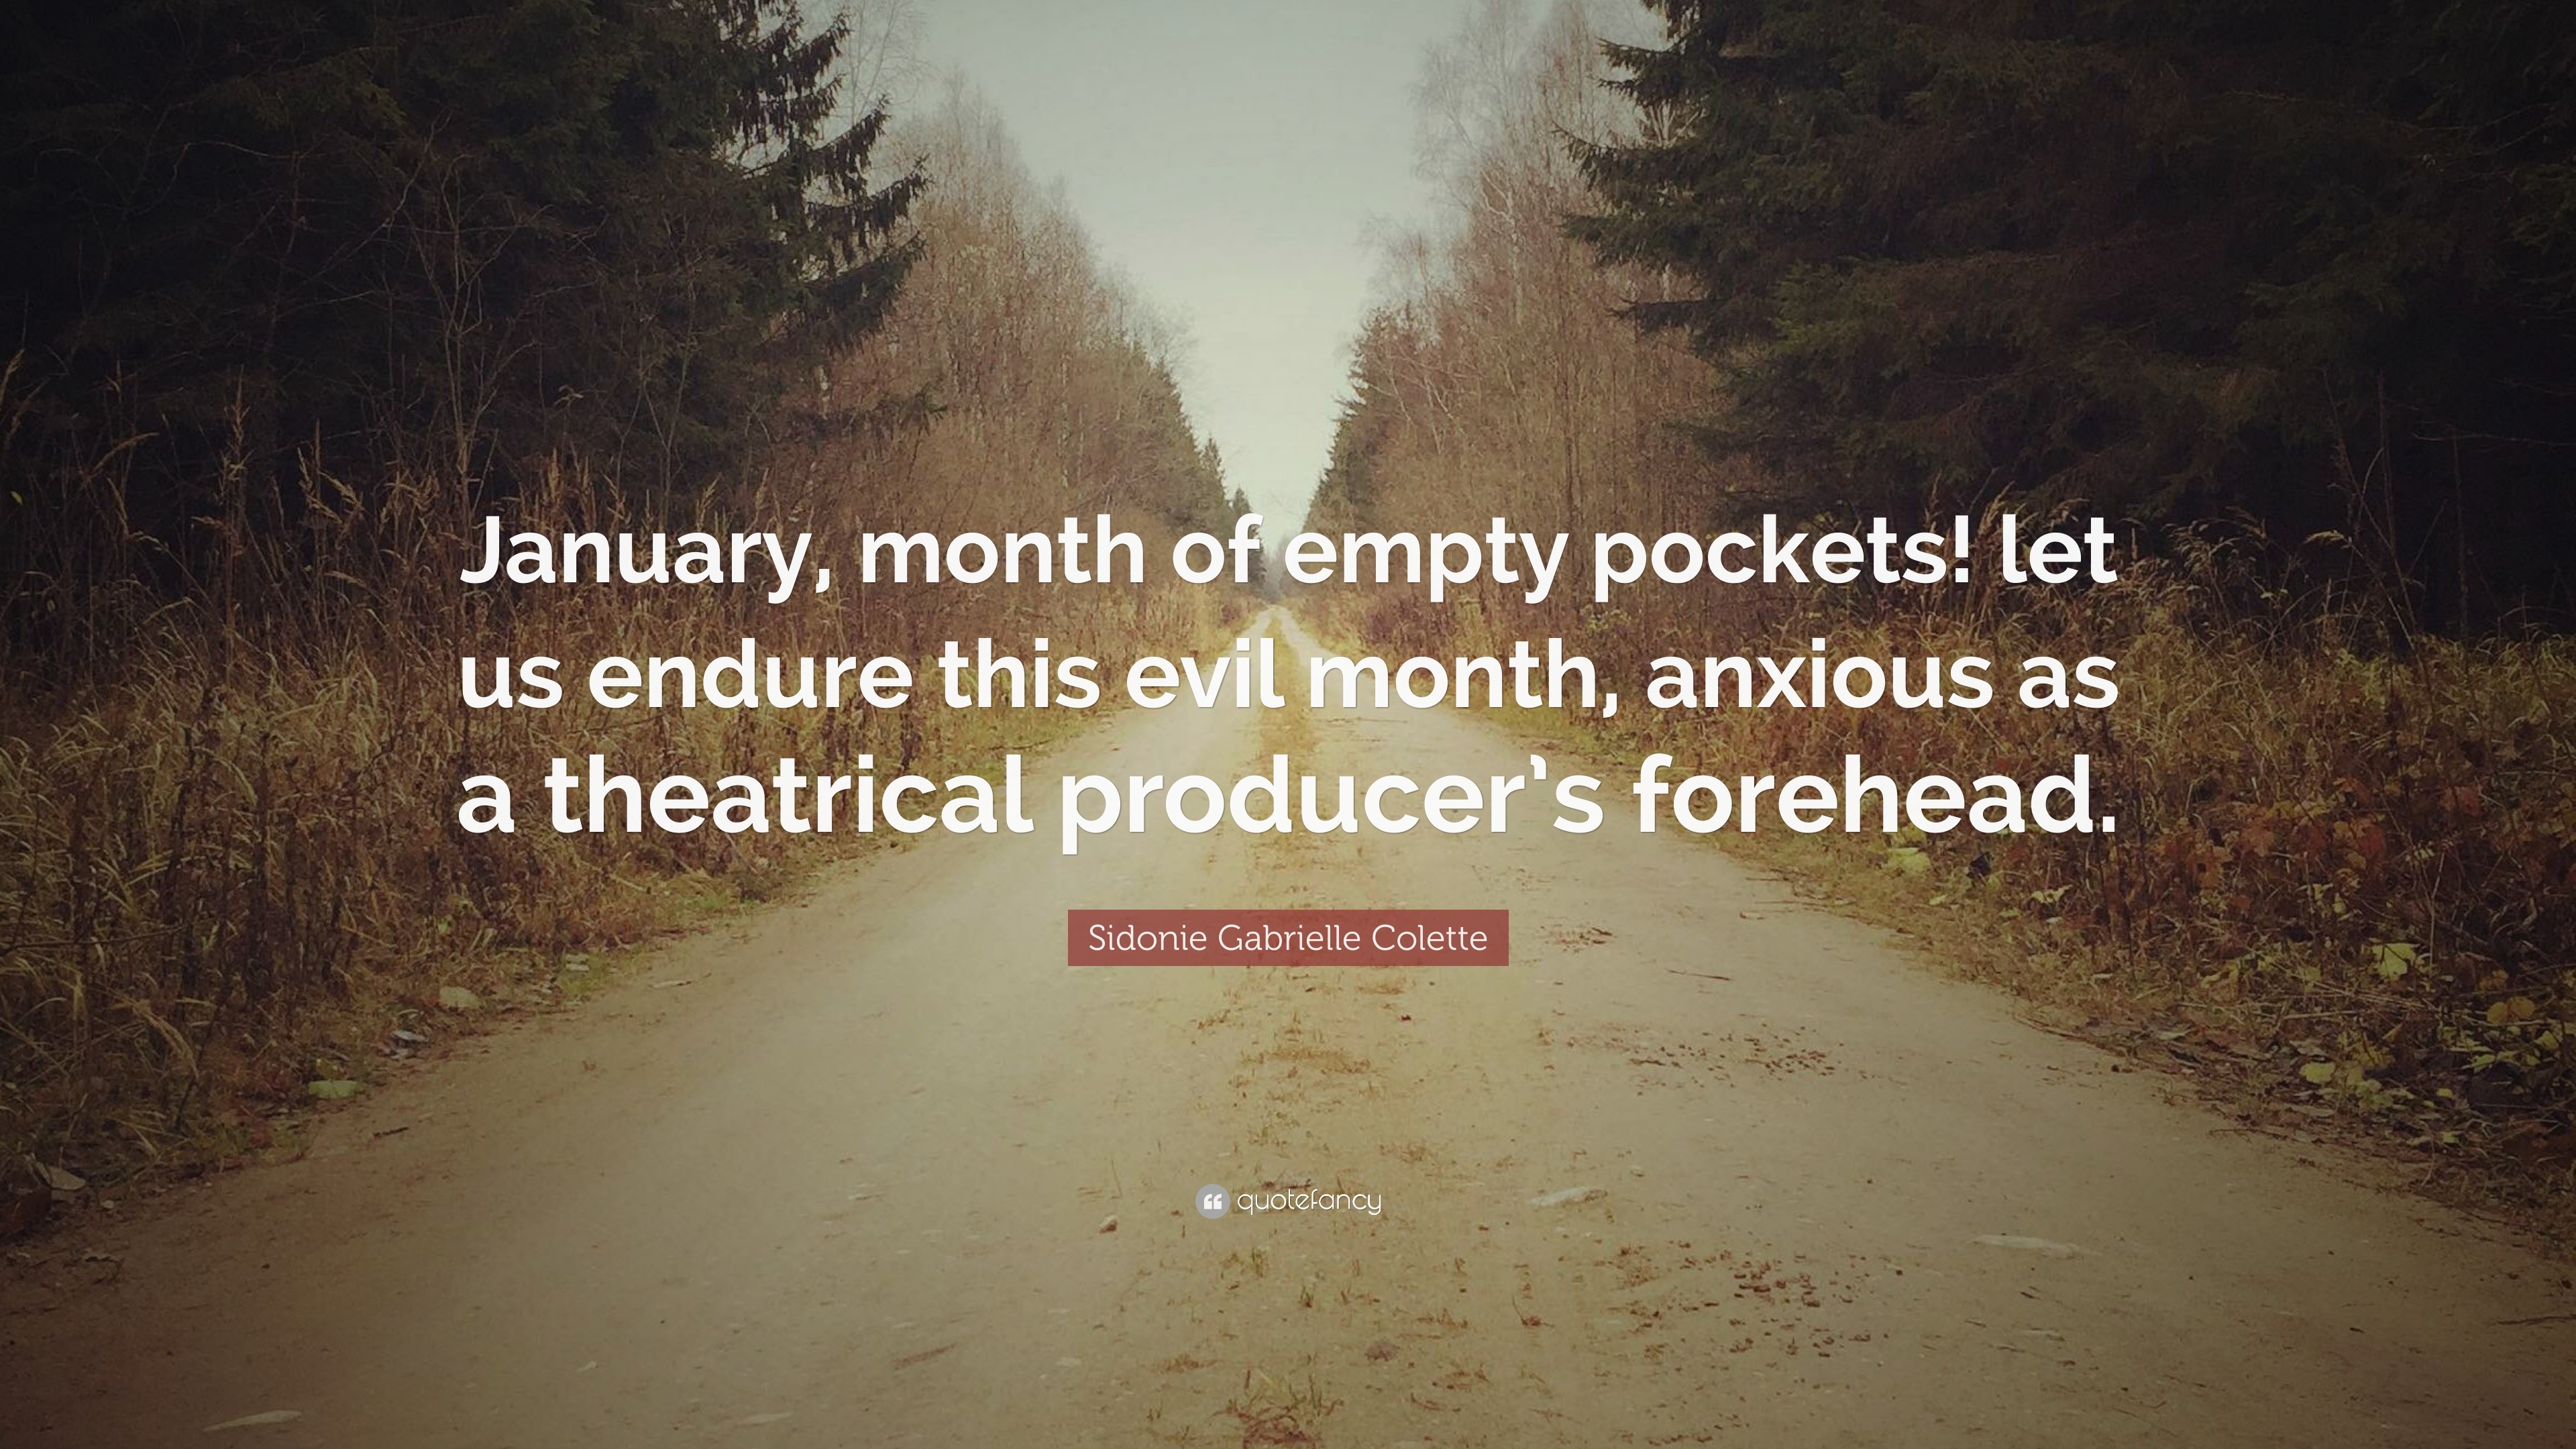 empty pockets quotes